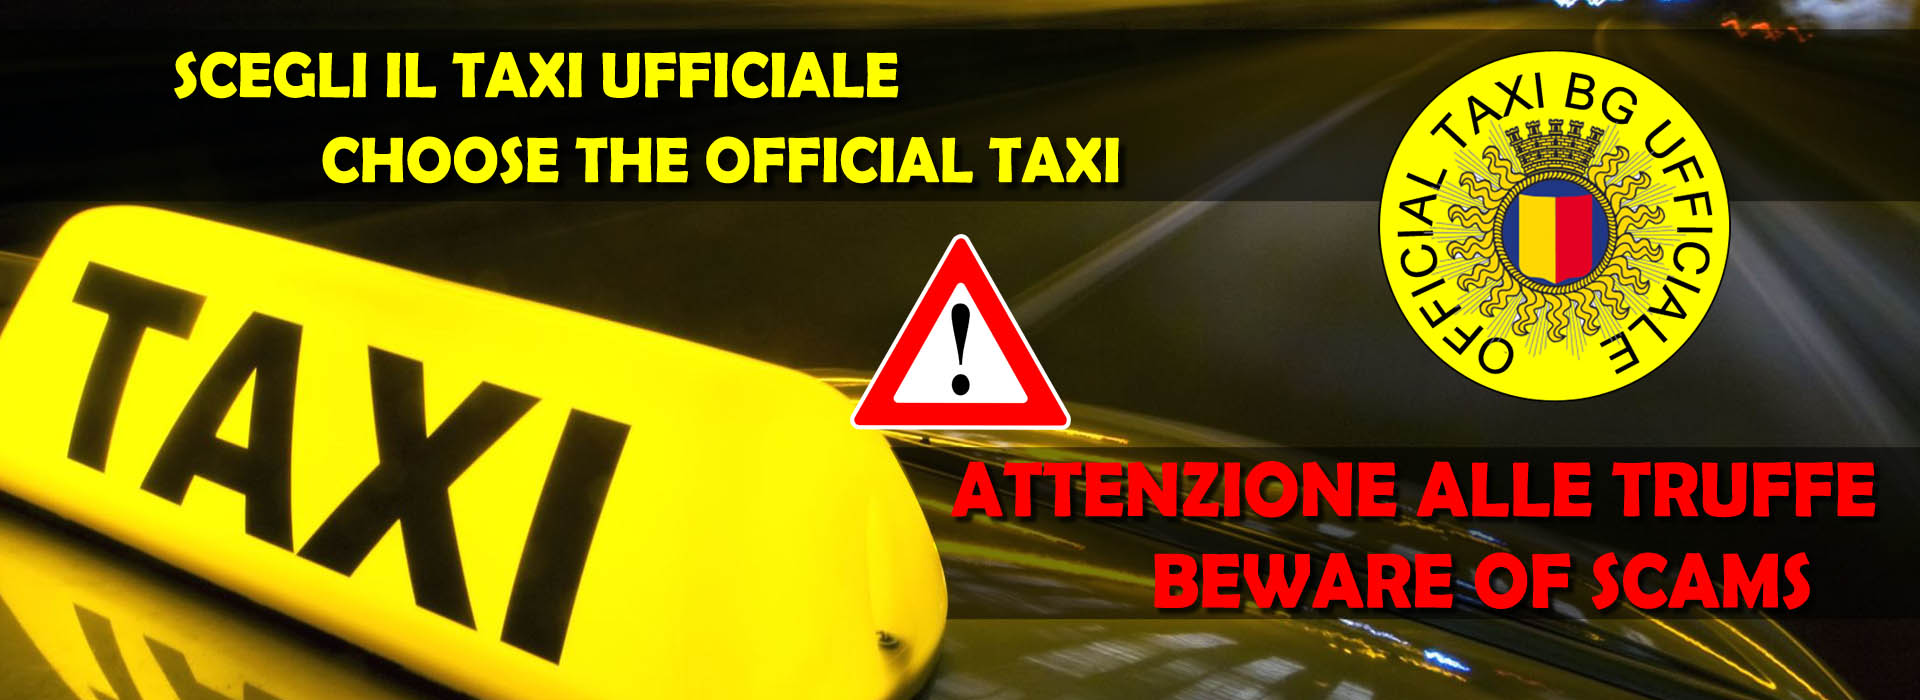 taxi-ufficiale-slide-1